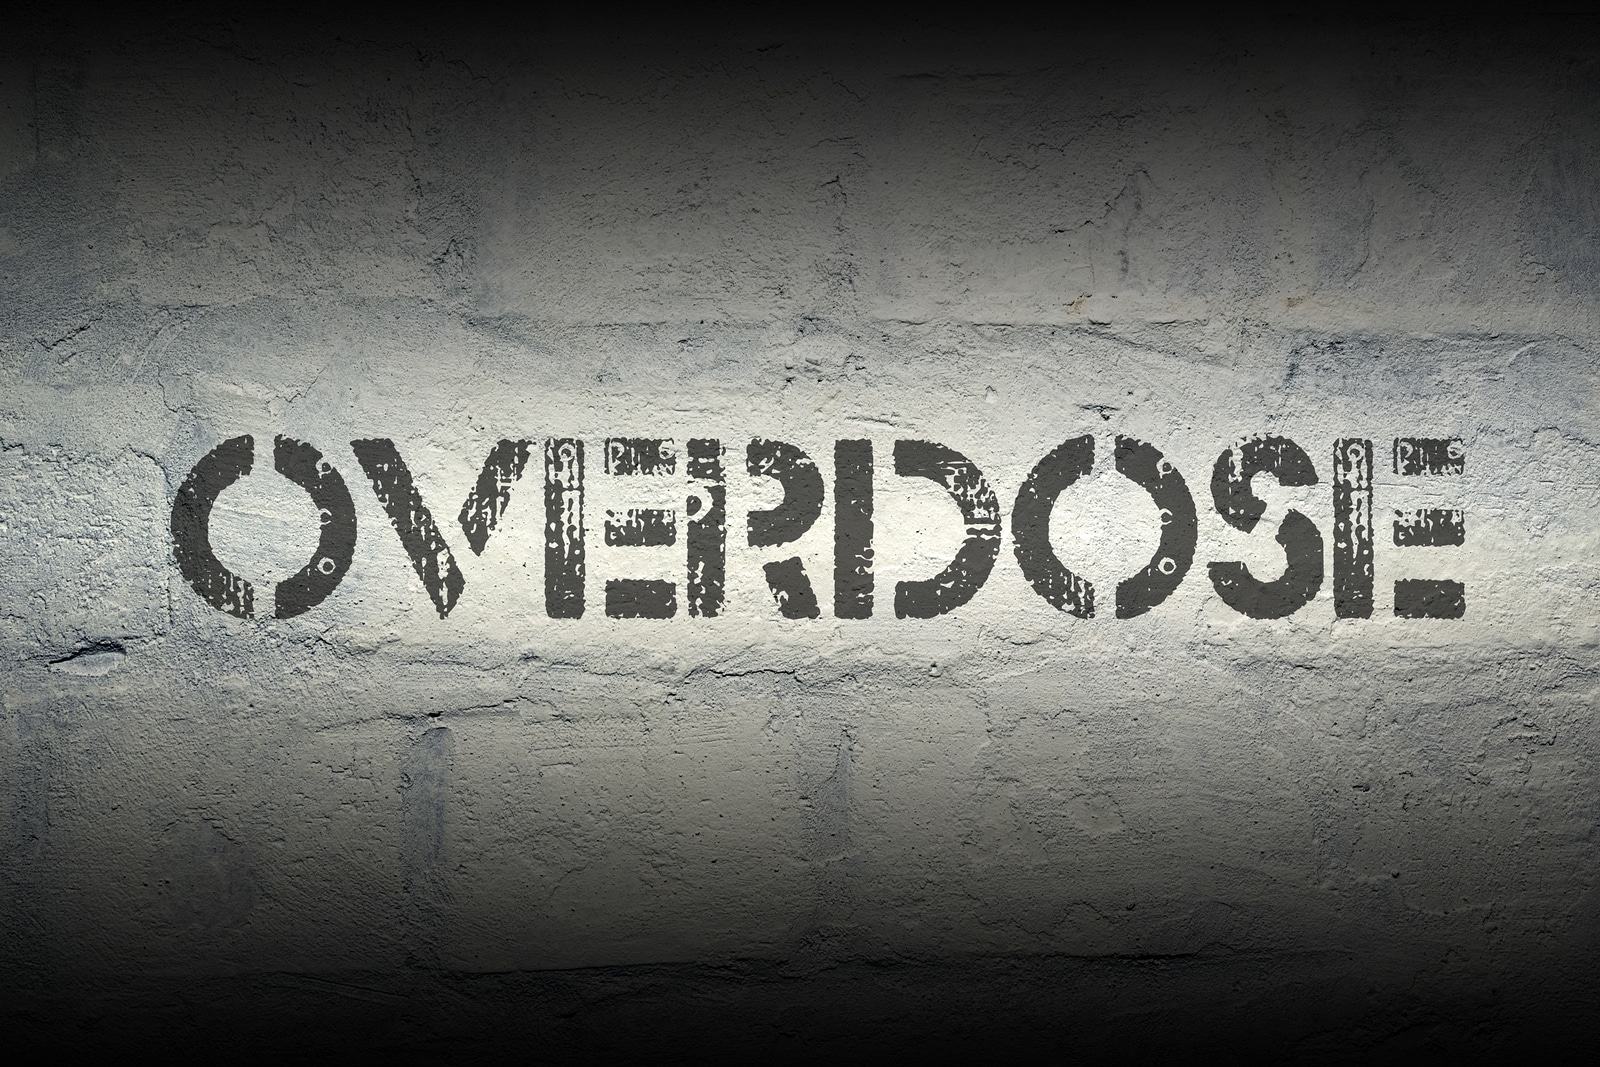 overdose stencil print on the grunge white brick wall | Drug overdose